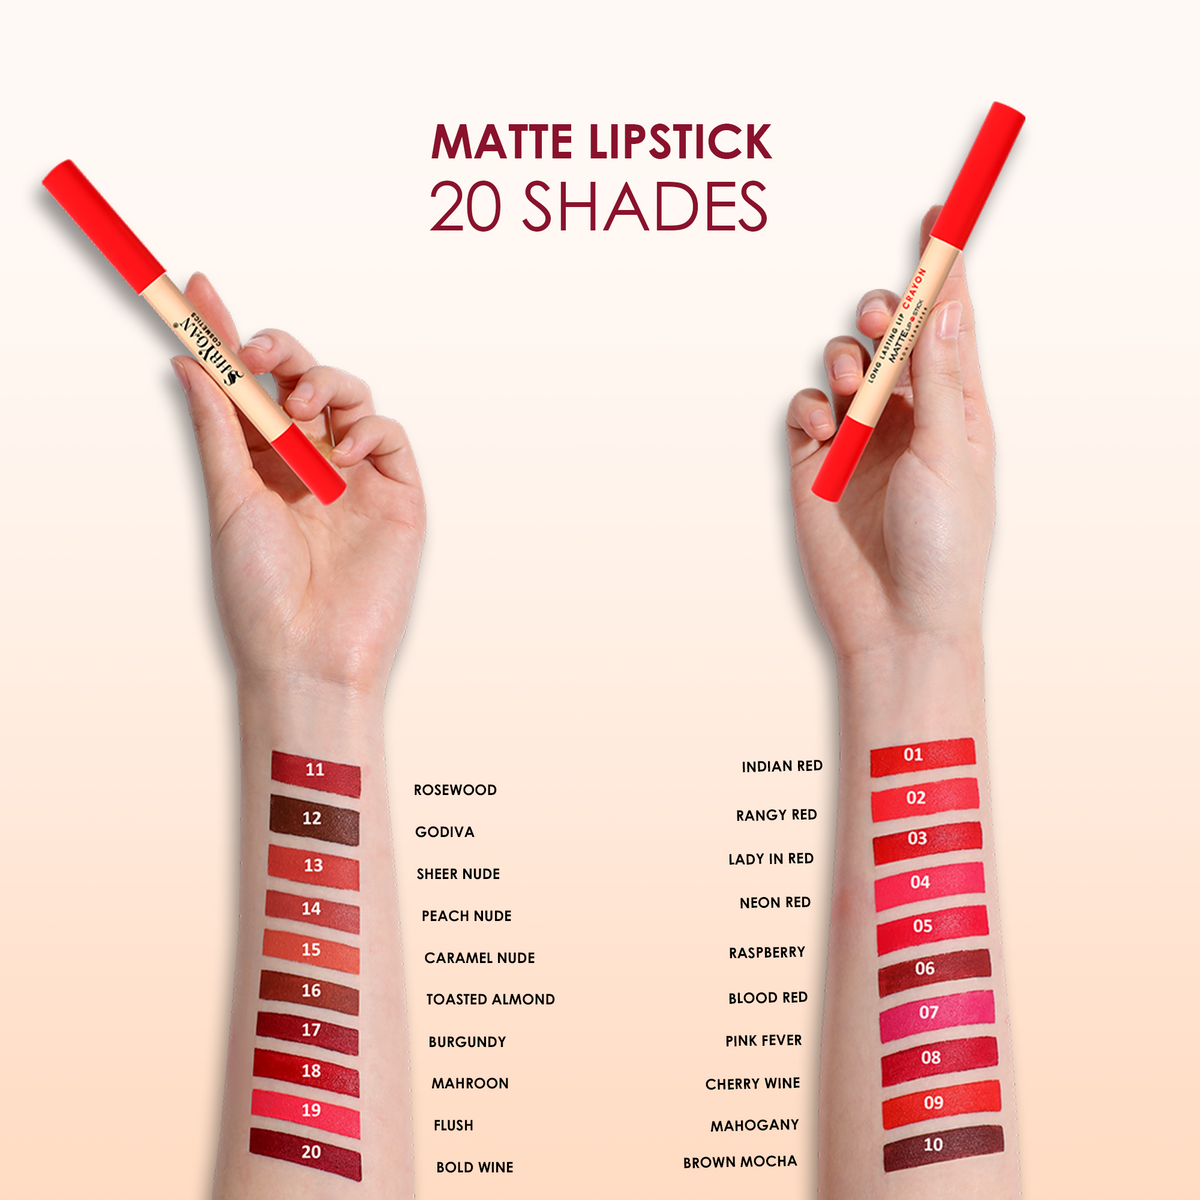 Crayon Matte Lipstick